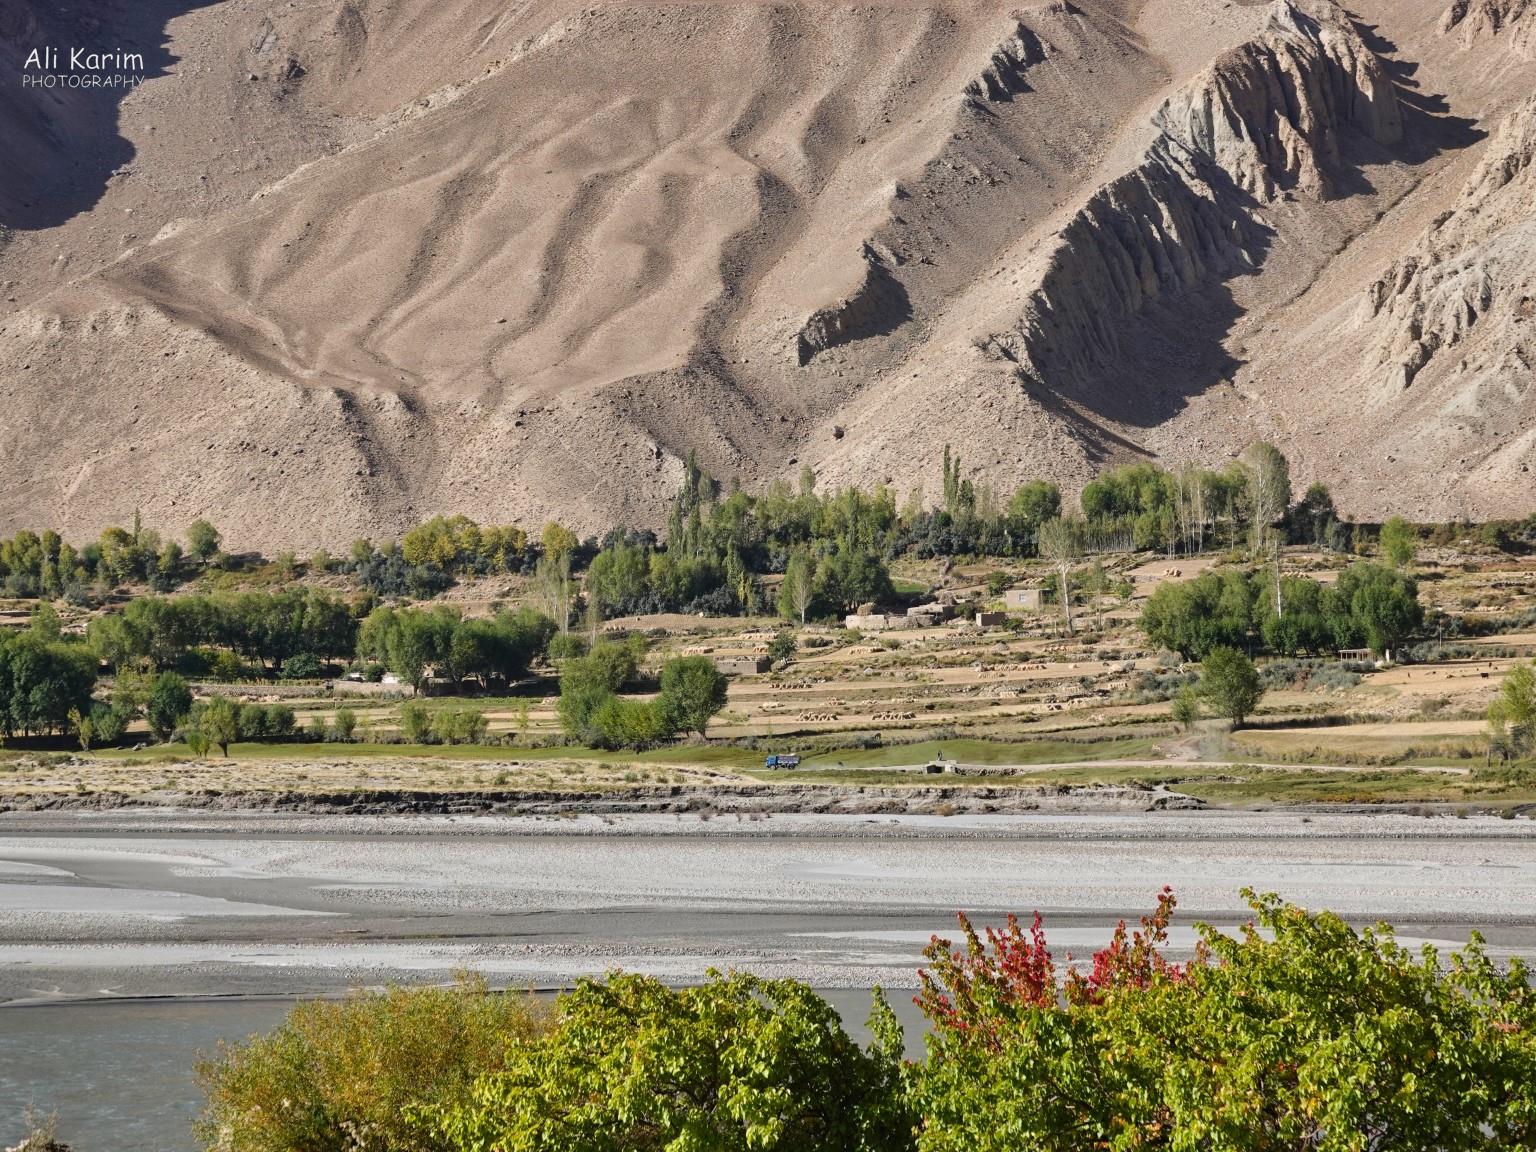 Onto Khorog, Tajikistan, Farming on flat lands along the Panj river on the Afghan side